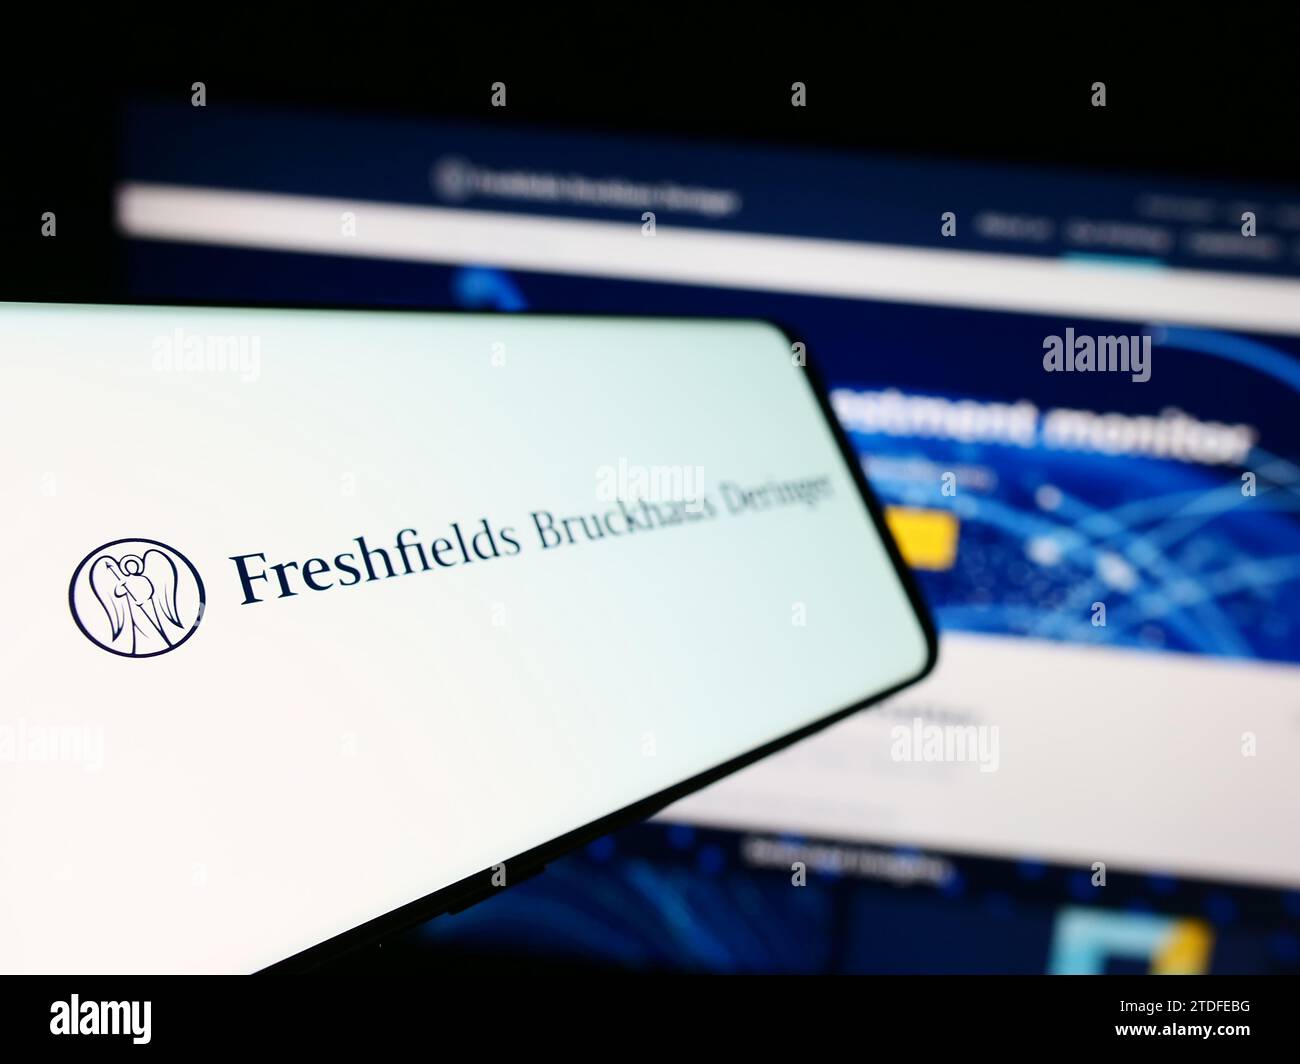 Freshfields bruckhaus deringer logo hi-res stock photography and images ...